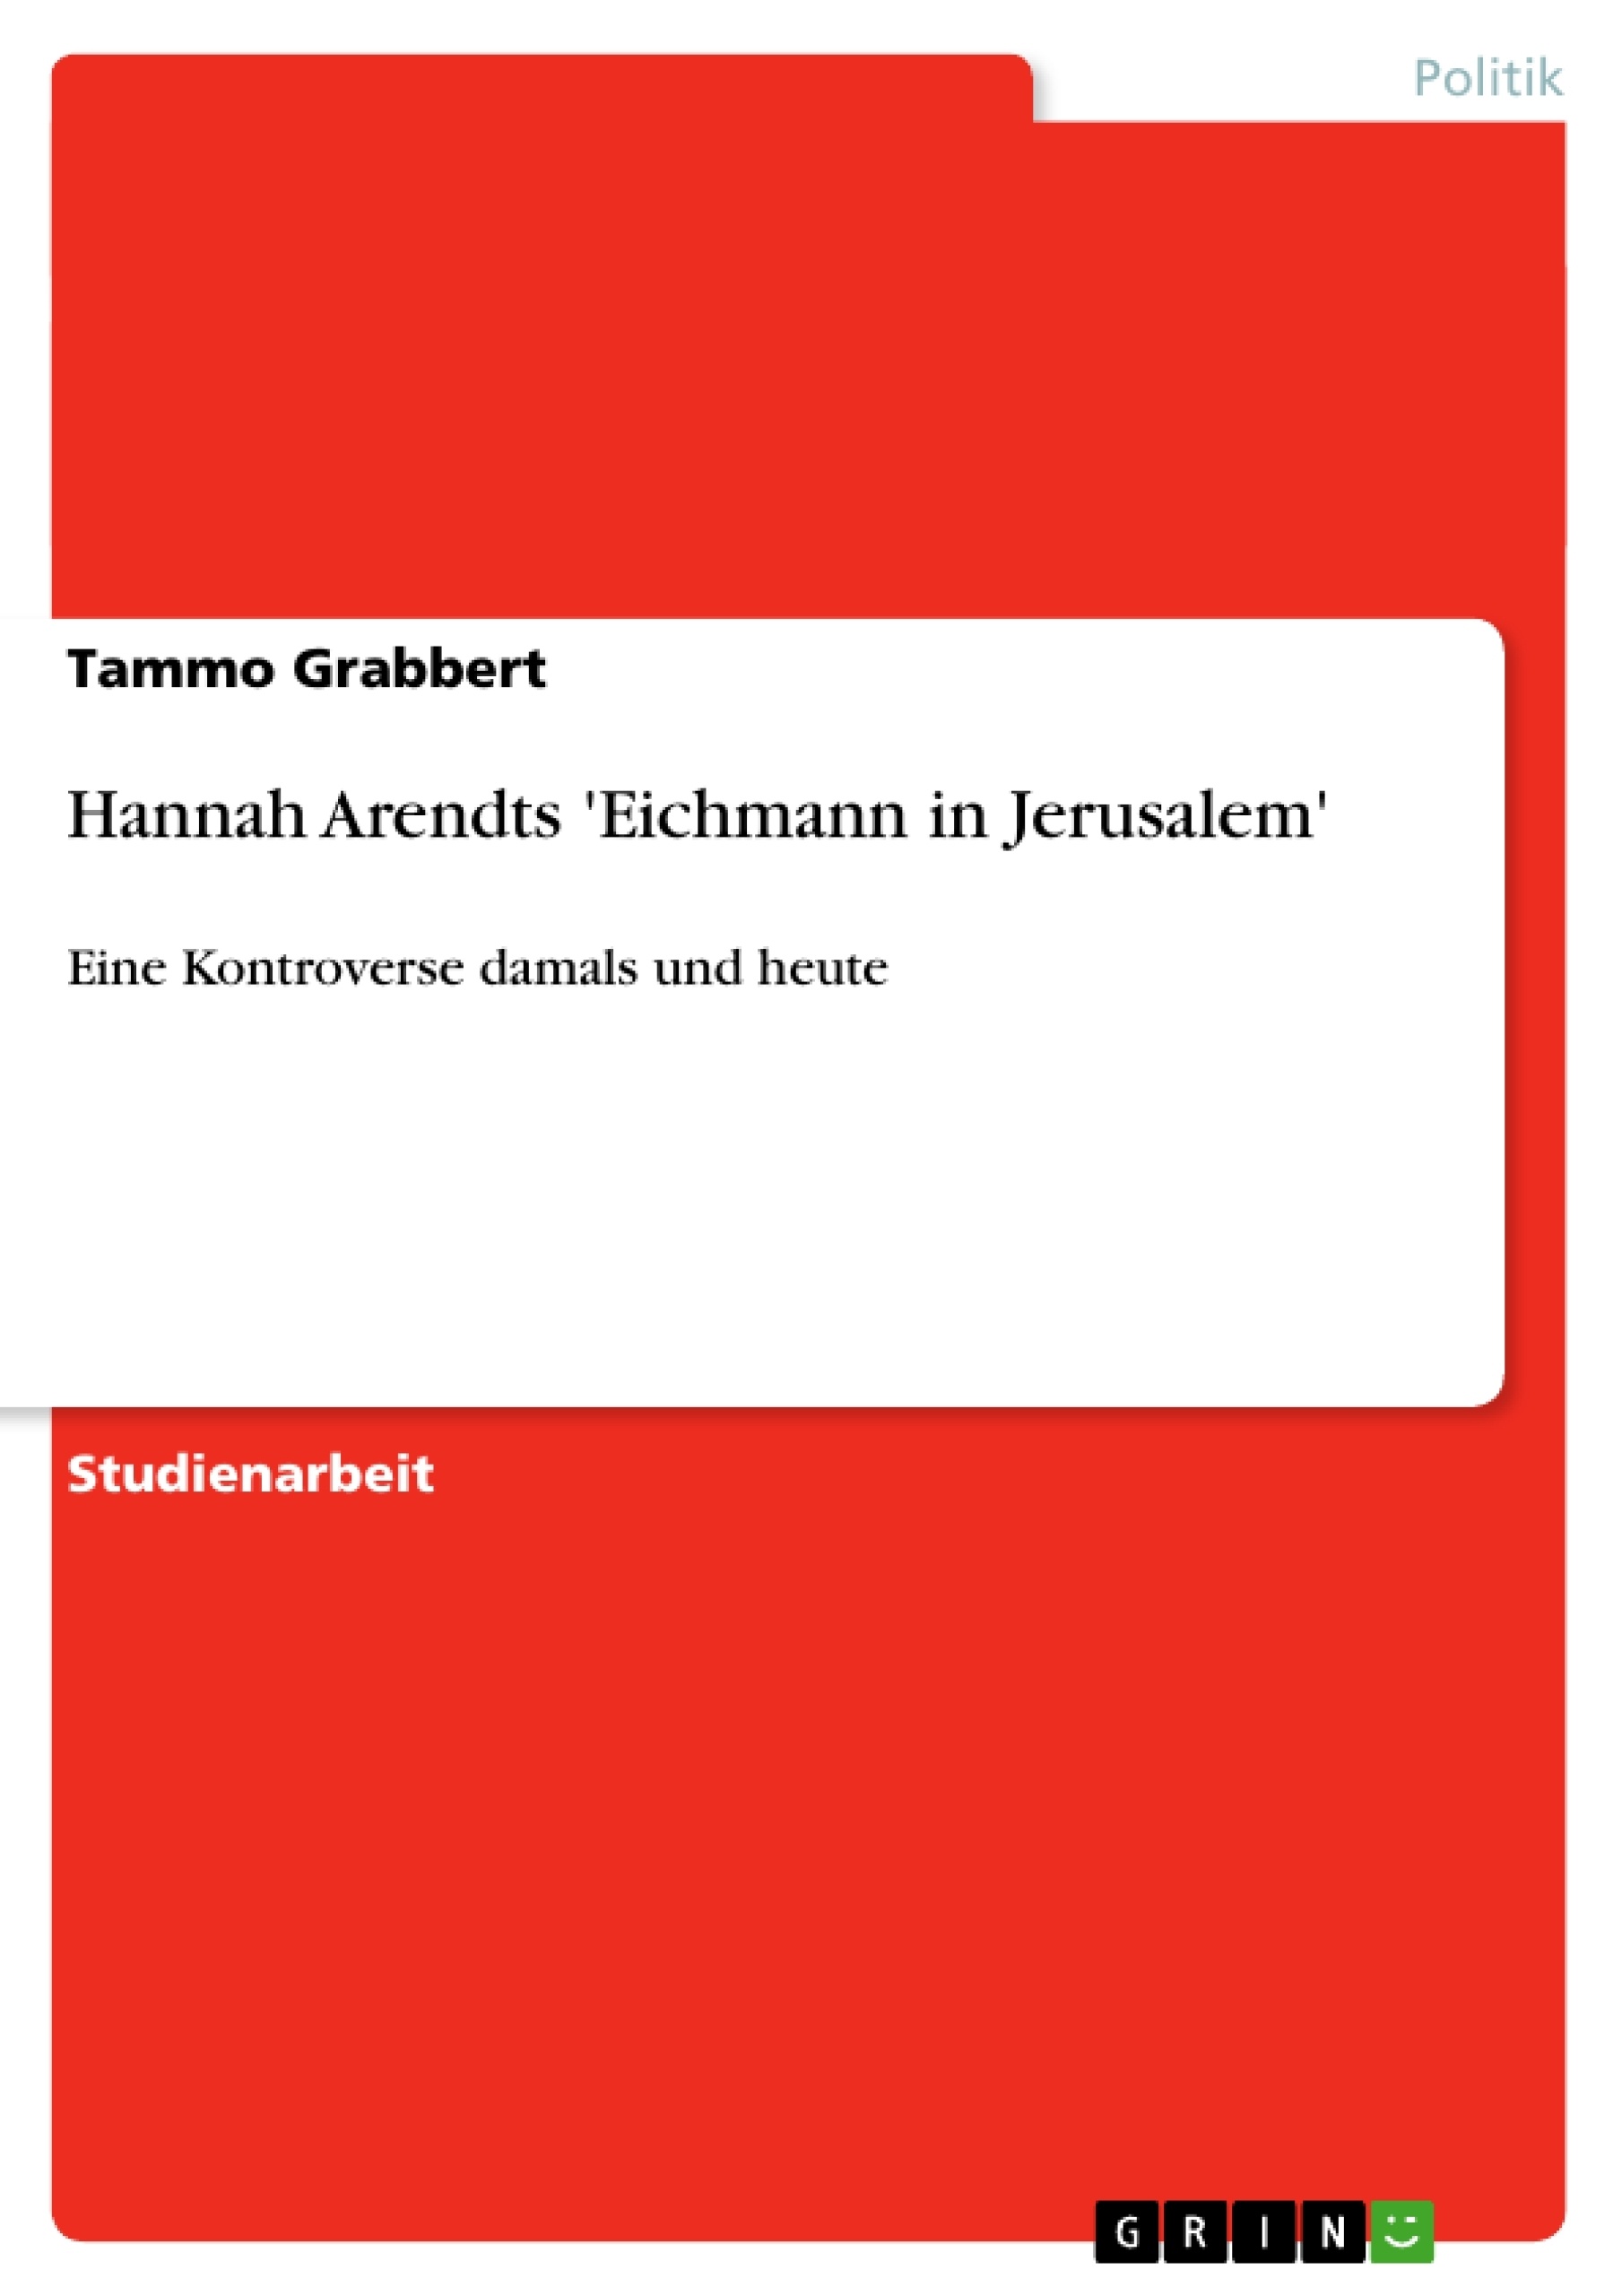 Titre: Hannah Arendts 'Eichmann in Jerusalem'